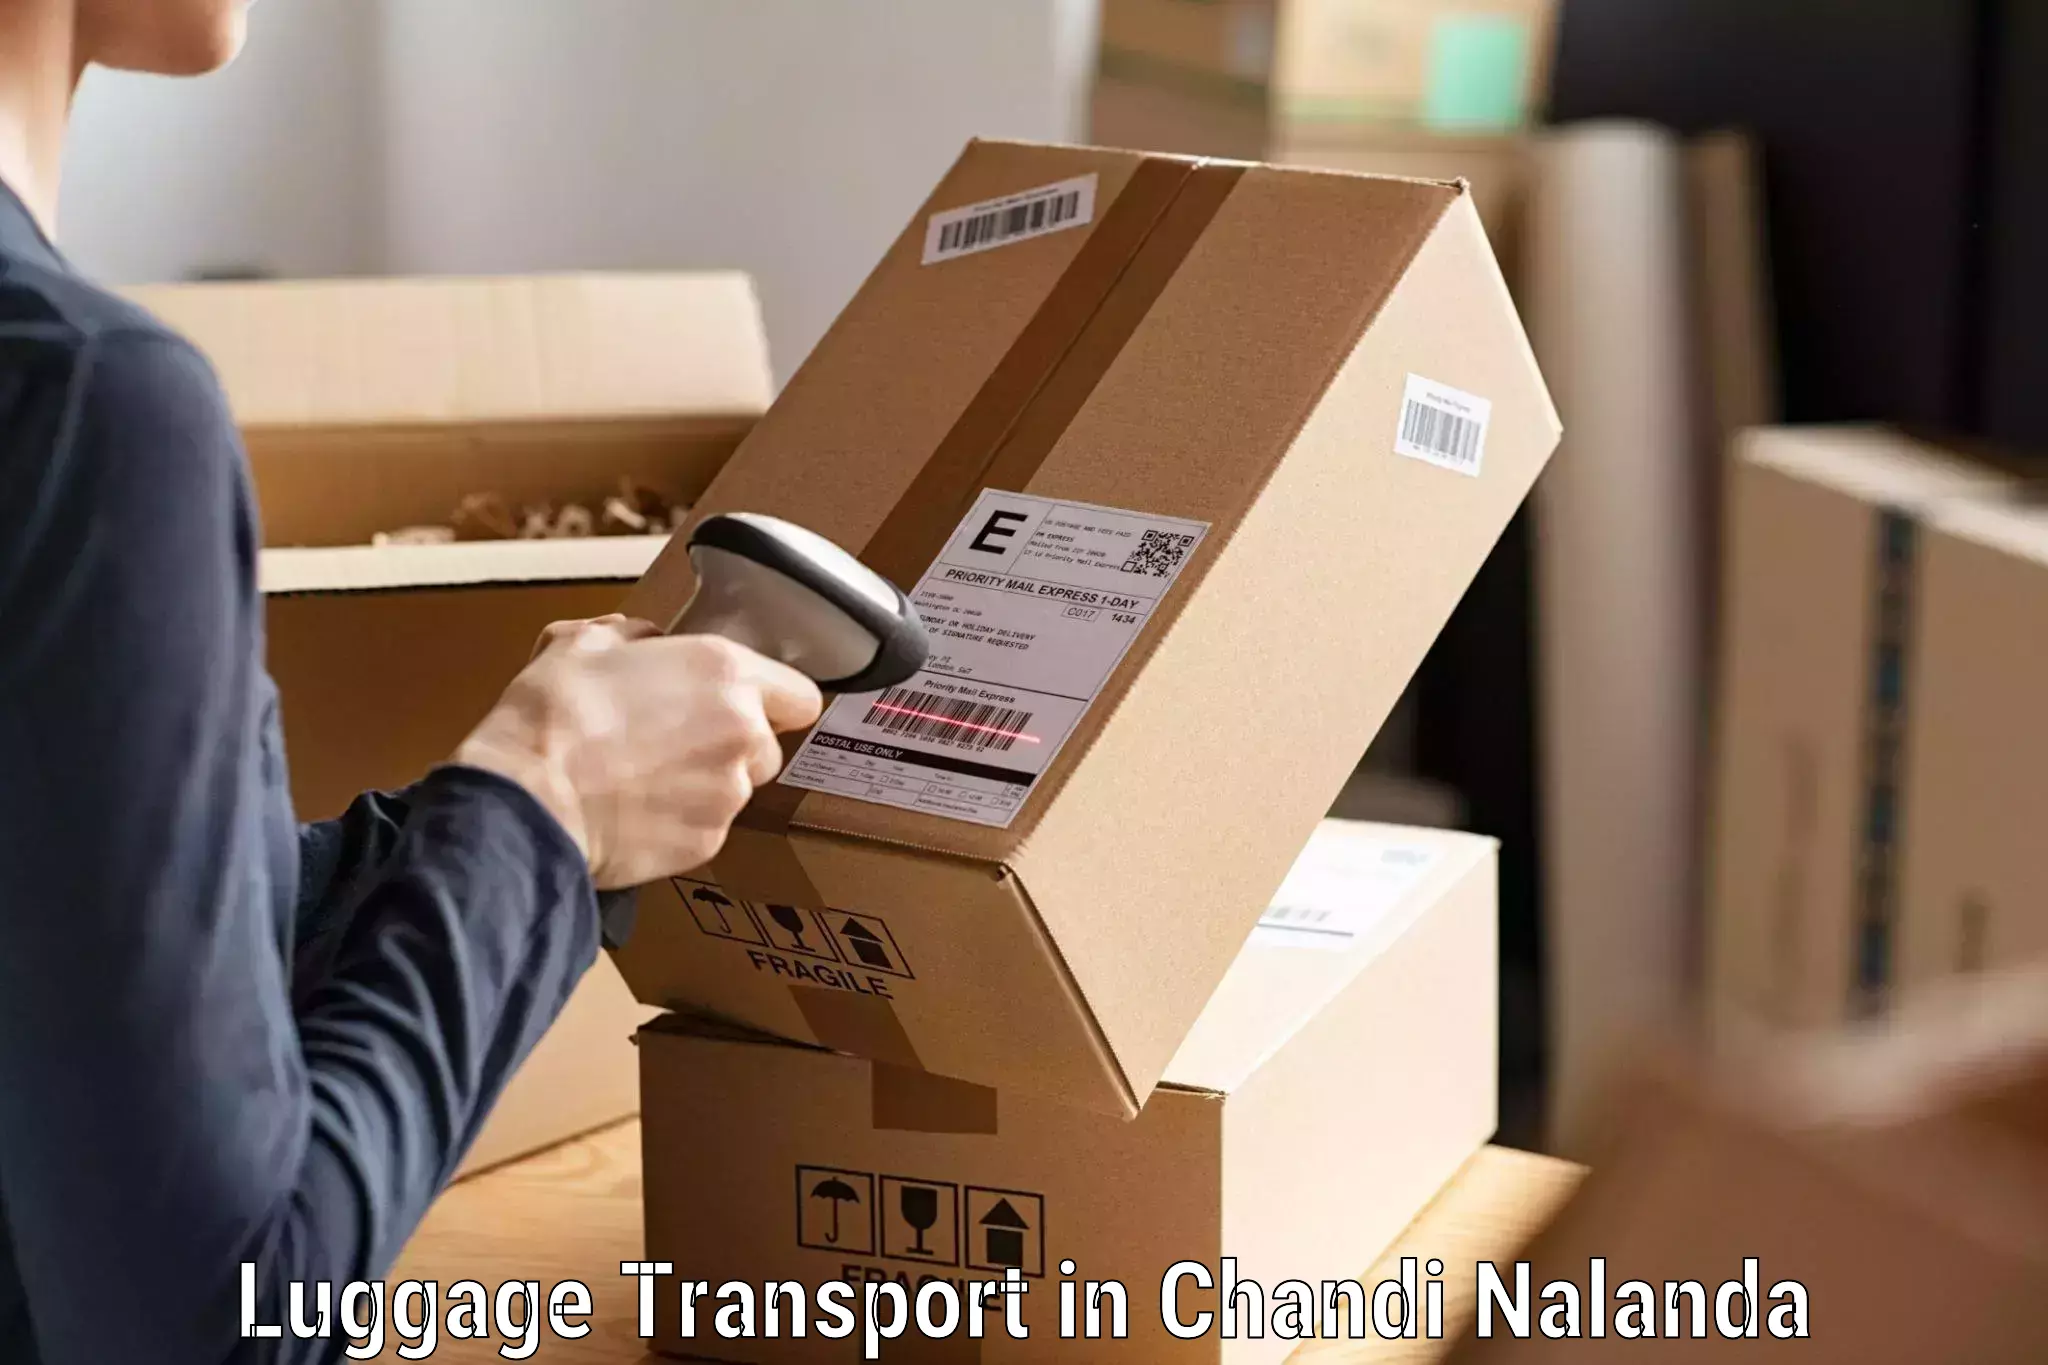 Luggage transport logistics in Chandi Nalanda